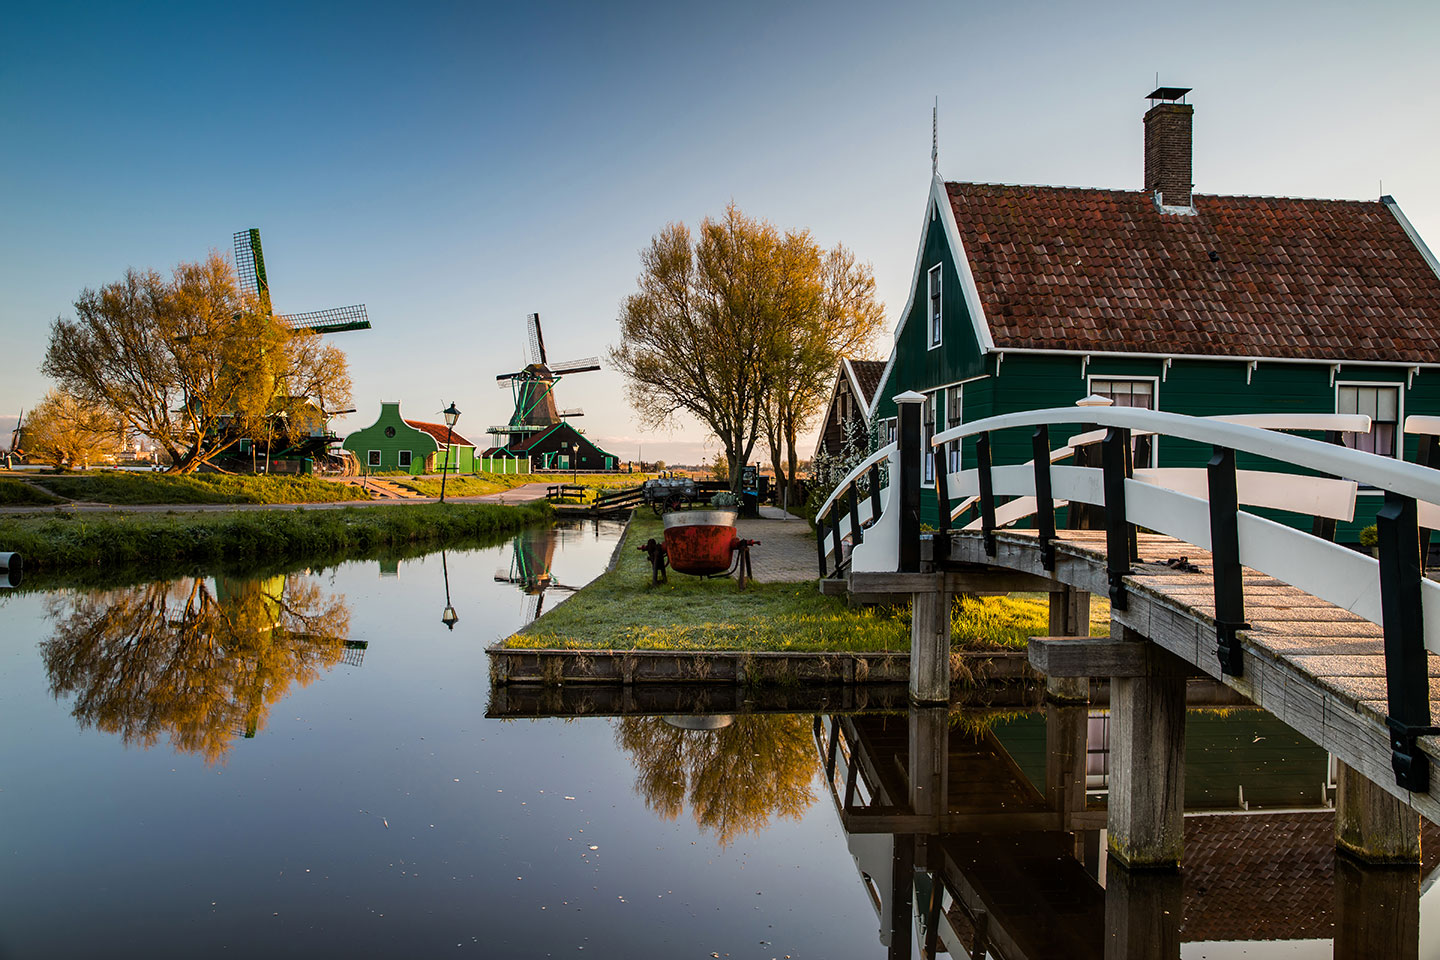 Iconic windmill village near Amsterdam, the Netherlands of Zaanse Schans